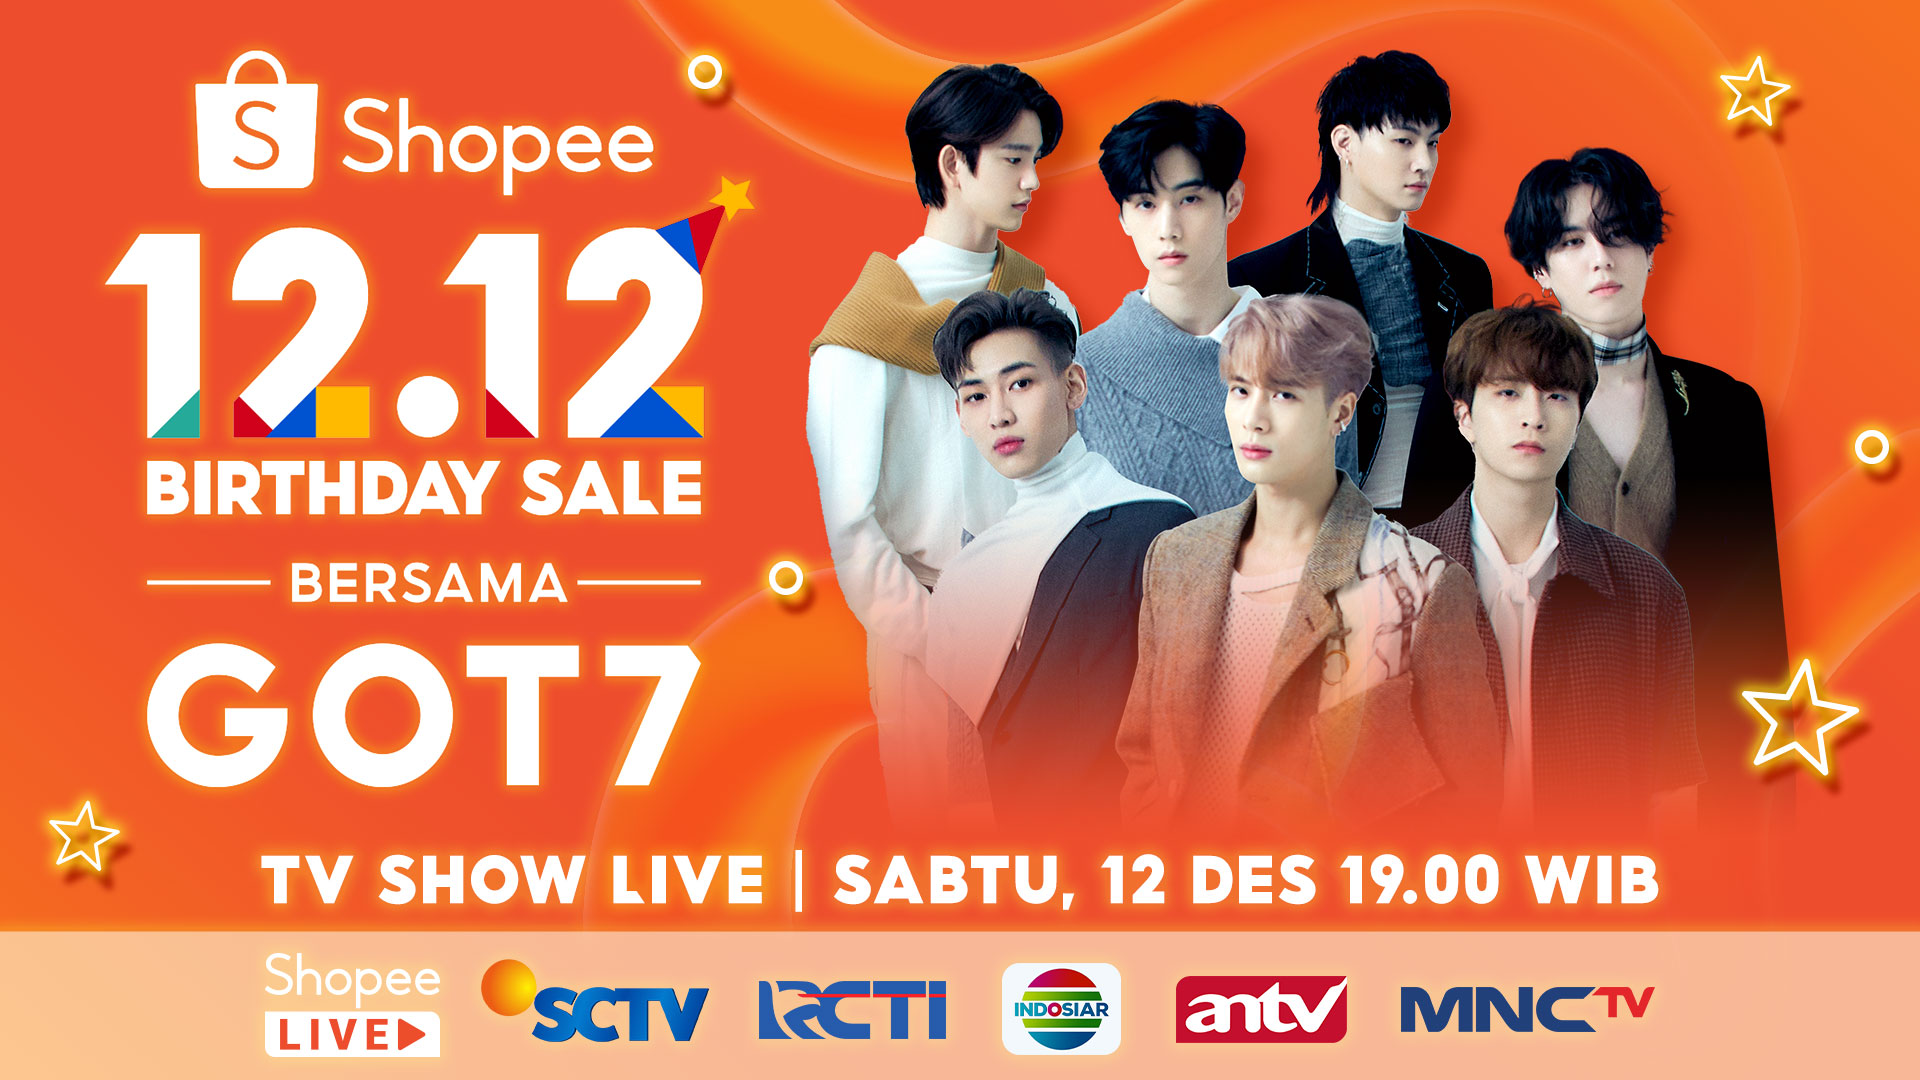 Stray Kids dan GOT7 Bakal Meriahkan TV Show Shopee 12.12 Birthday Sale